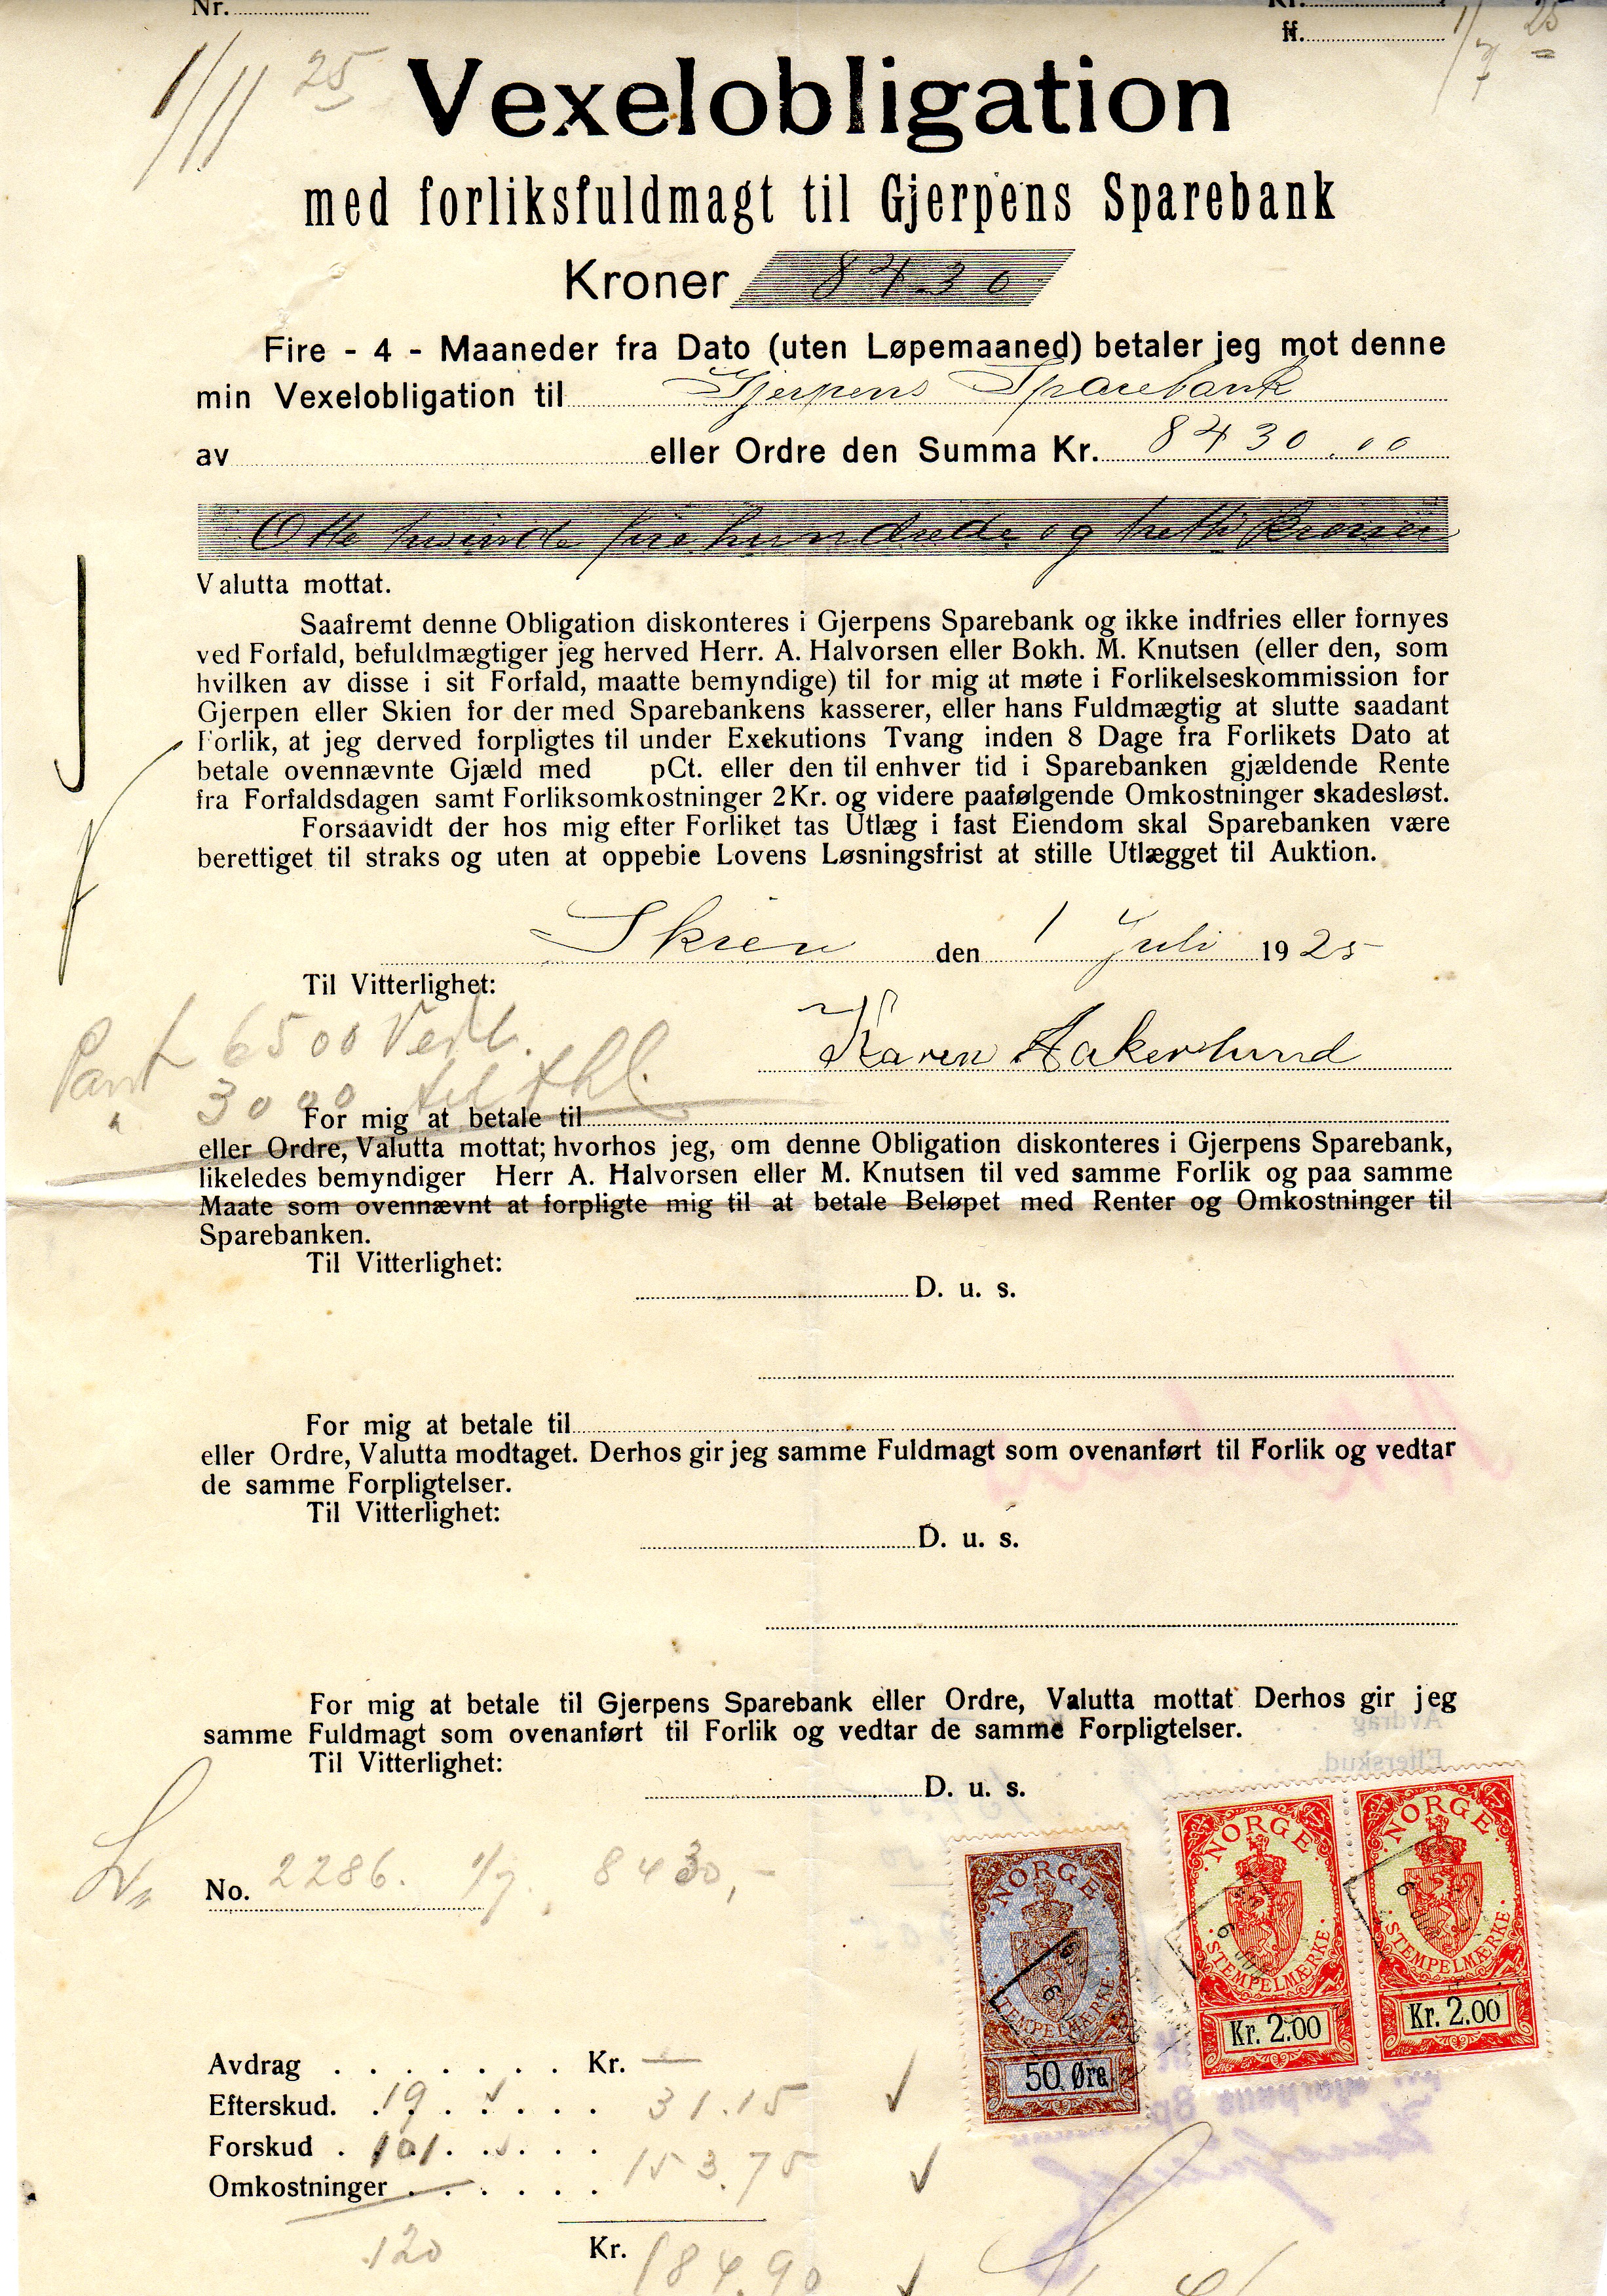 Vexelobligation Gjerpen sparebank nr 14503 1925 med stempelmerker